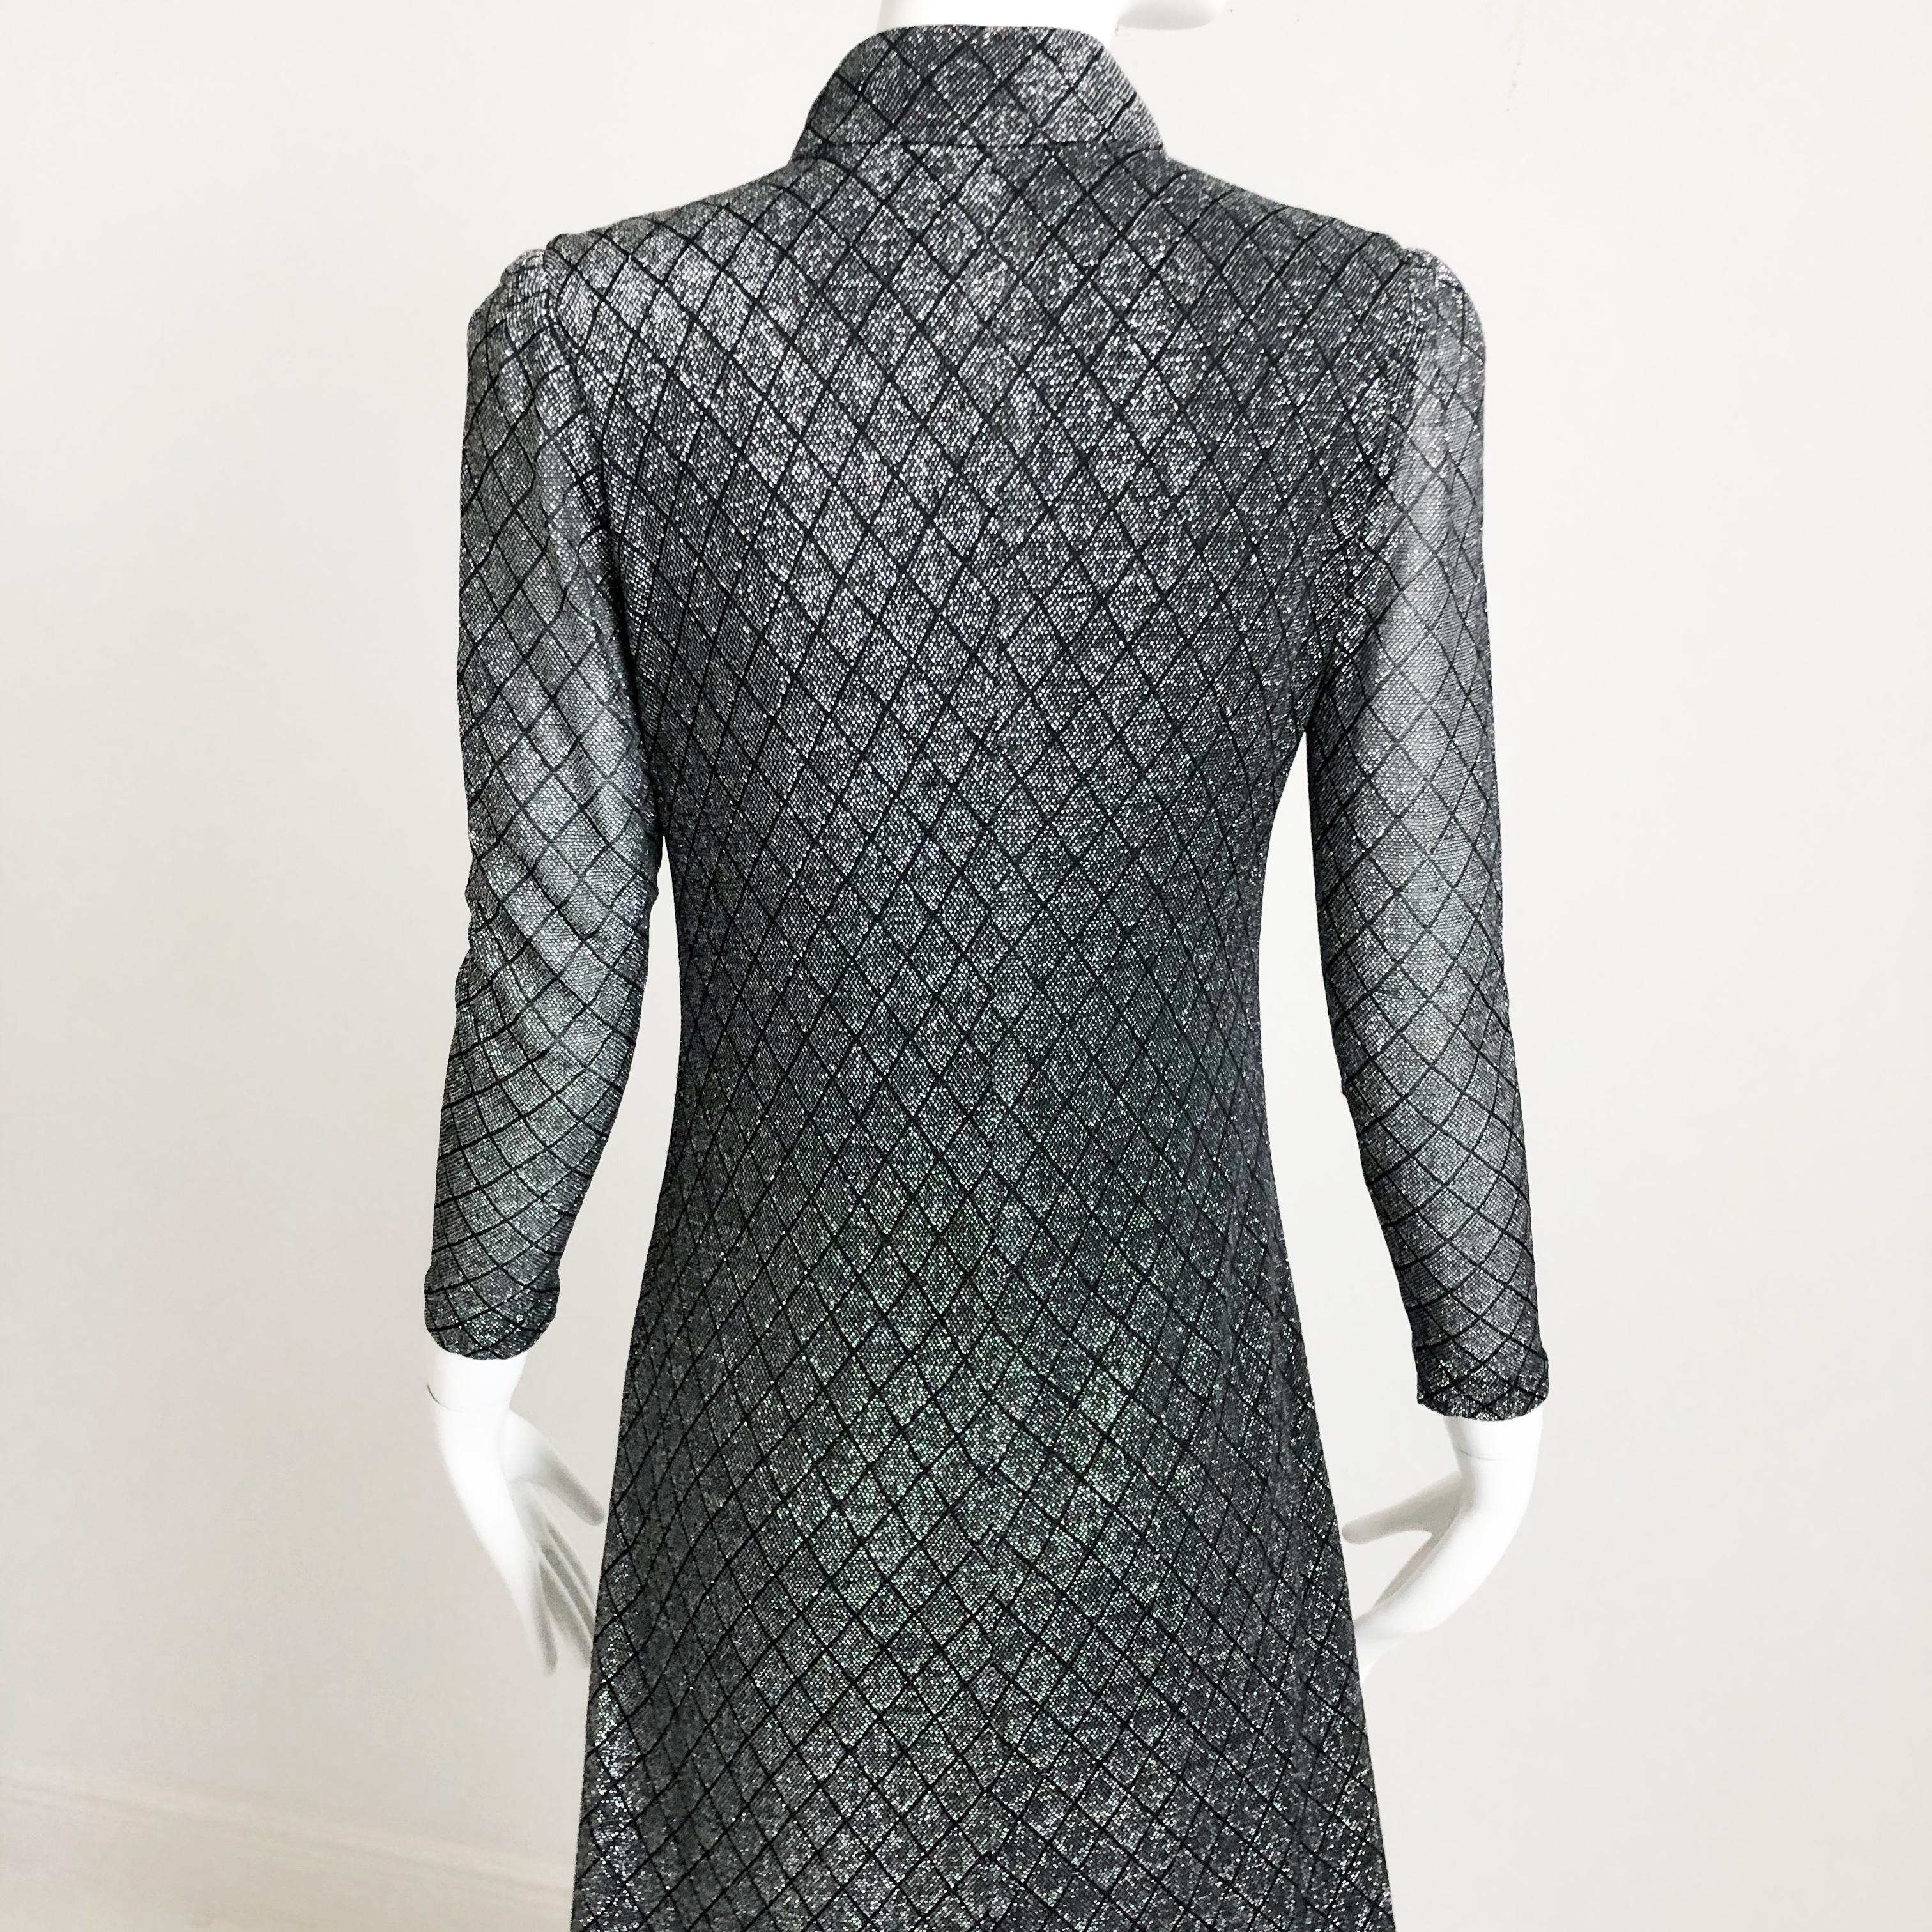 Donald Brooks Boutique Maxi Dress with Metallic Diamond Pattern Vintage 70s XS For Sale 4